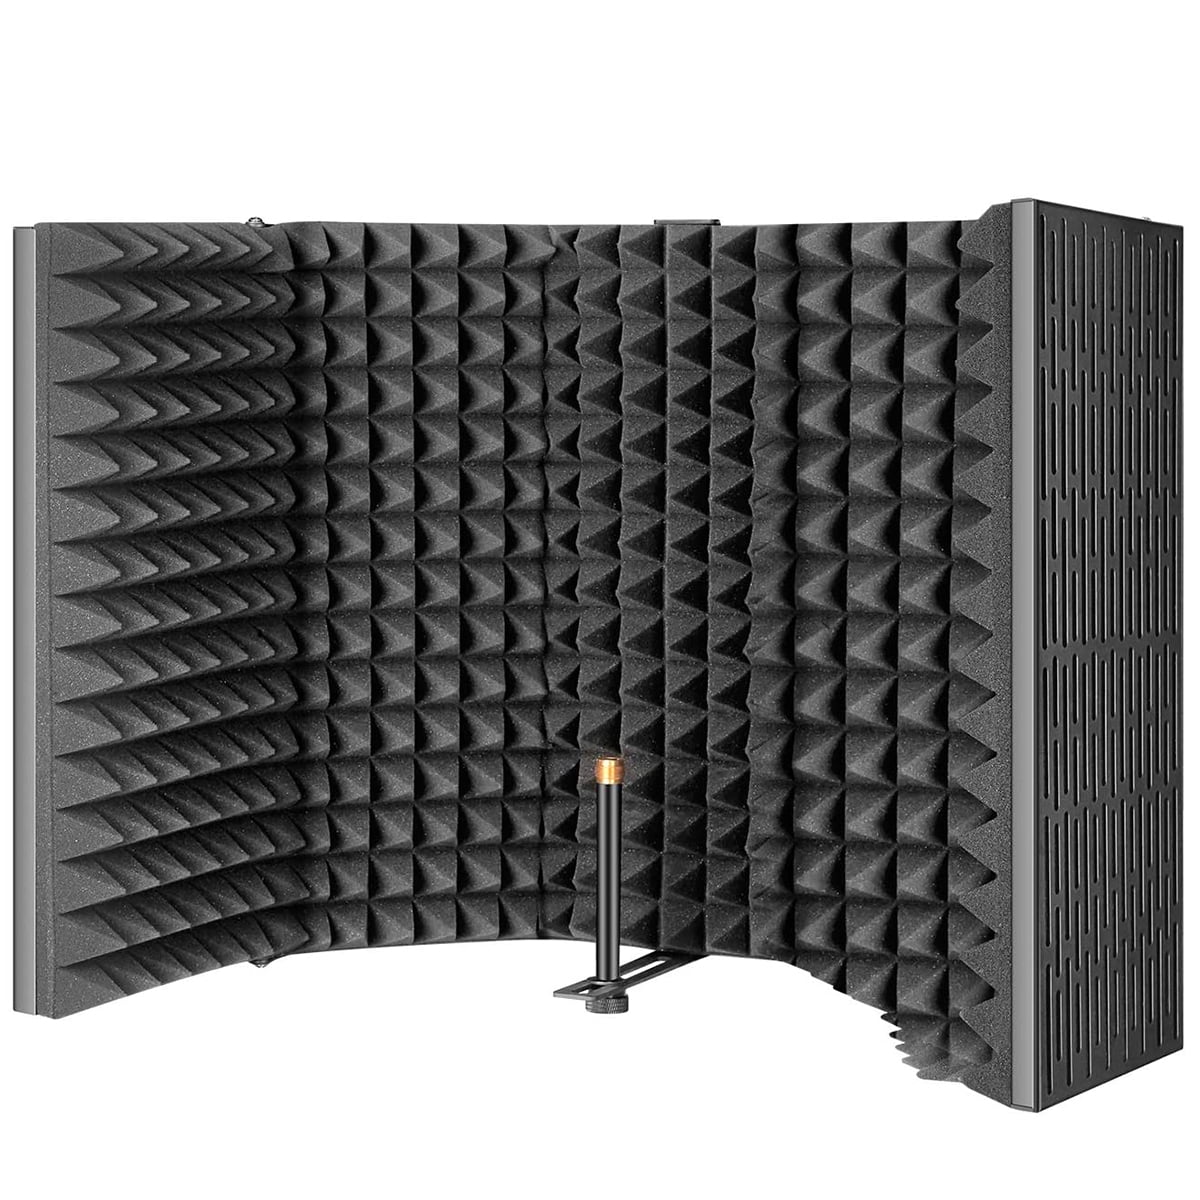 TopHGC Microphone Isolation Foam,Sound Shield,Foldable Studio,Mic Sound Absorbing Foam,for Studio